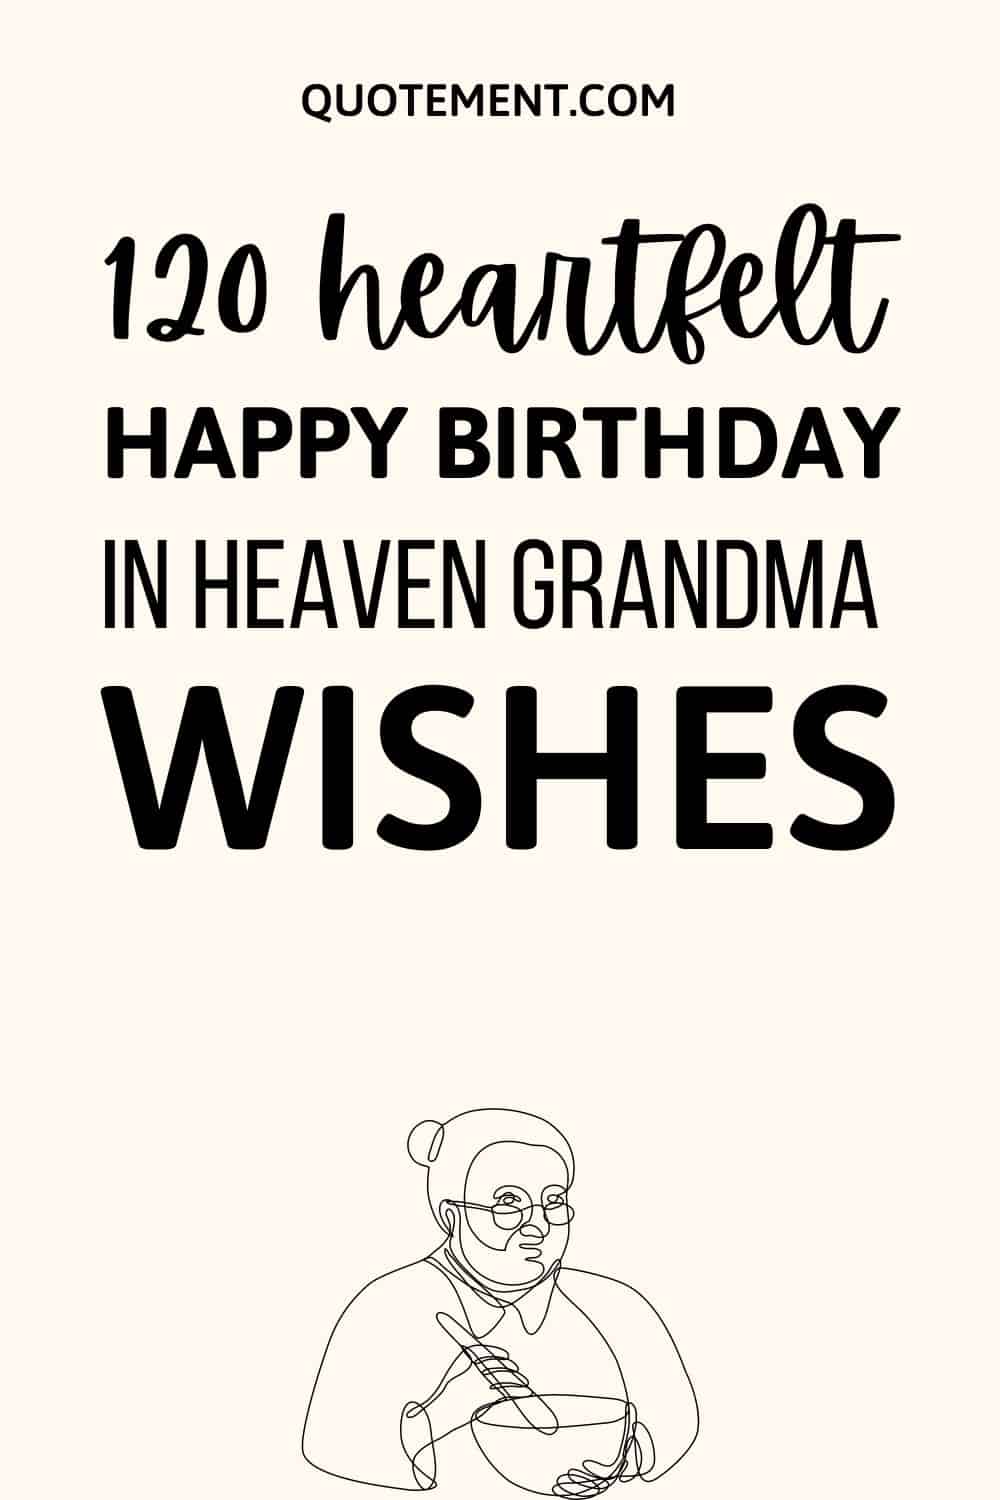 120 Heartfelt Happy Birthday In Heaven Grandma Wishes
